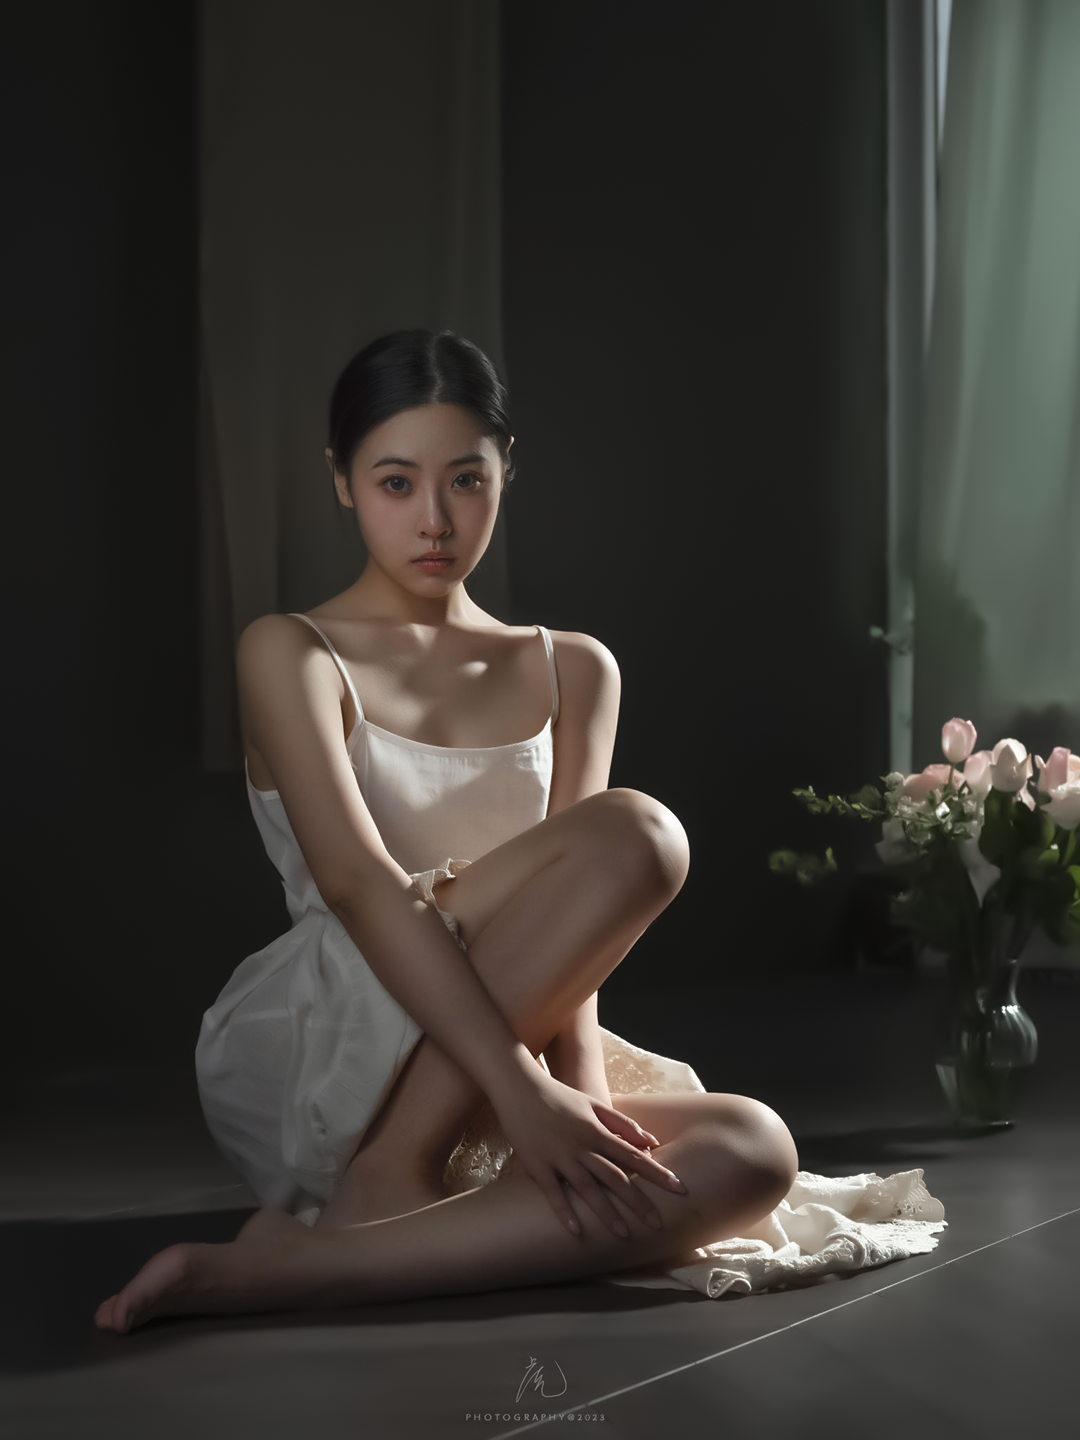 Lee Hu Women Asian Dark Hair White Clothing Barefoot Flowers 1080x1440